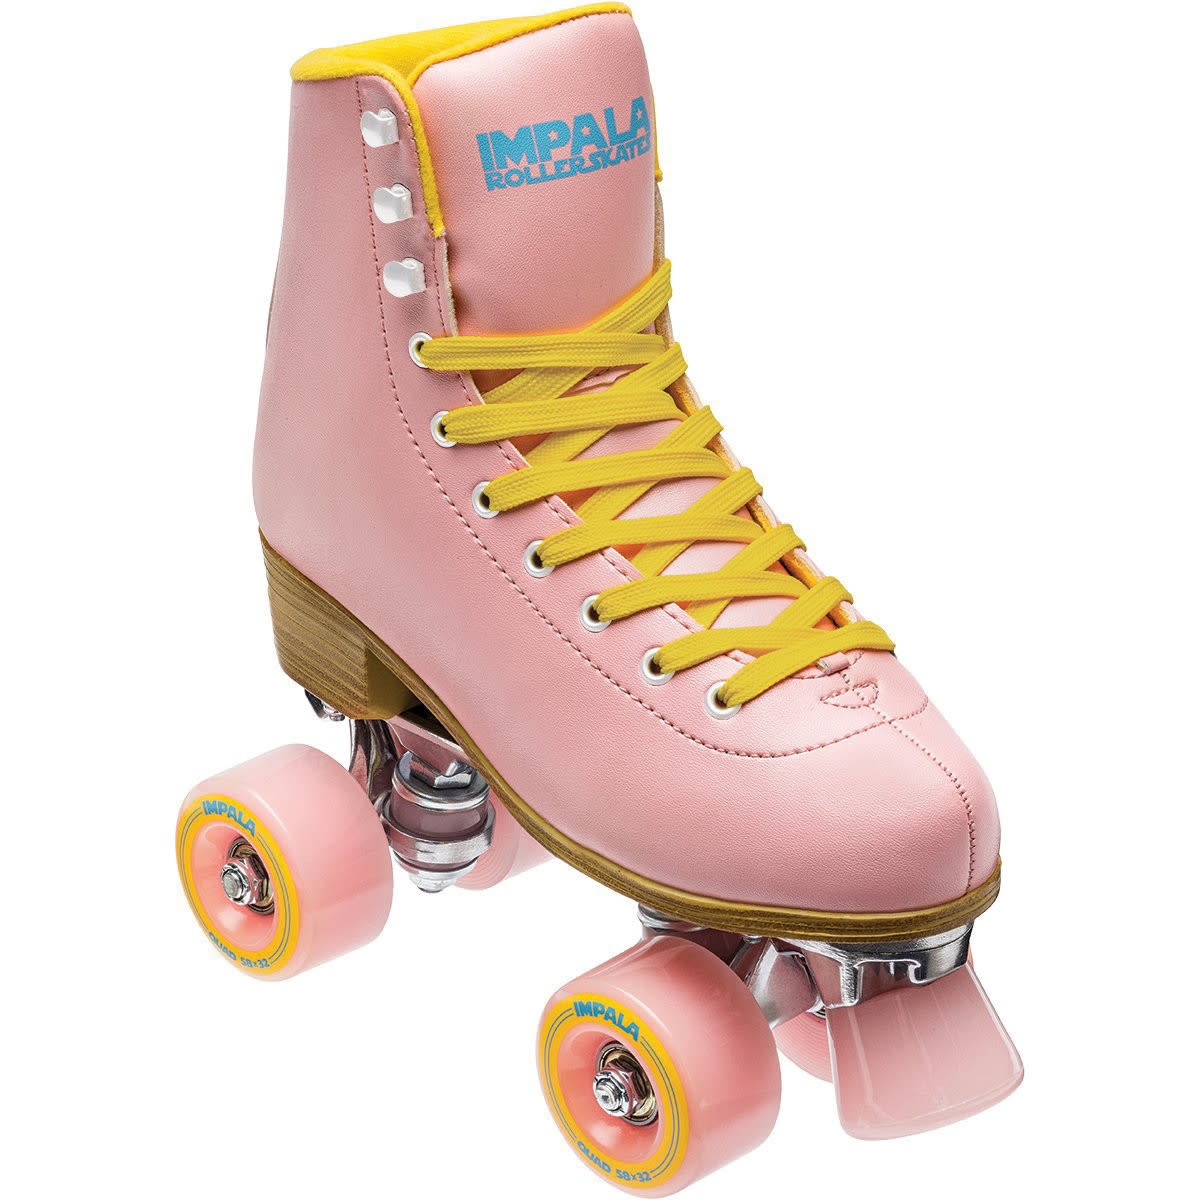 Impala Sidewalk Womens Roller Skates Pink/Yellow 8